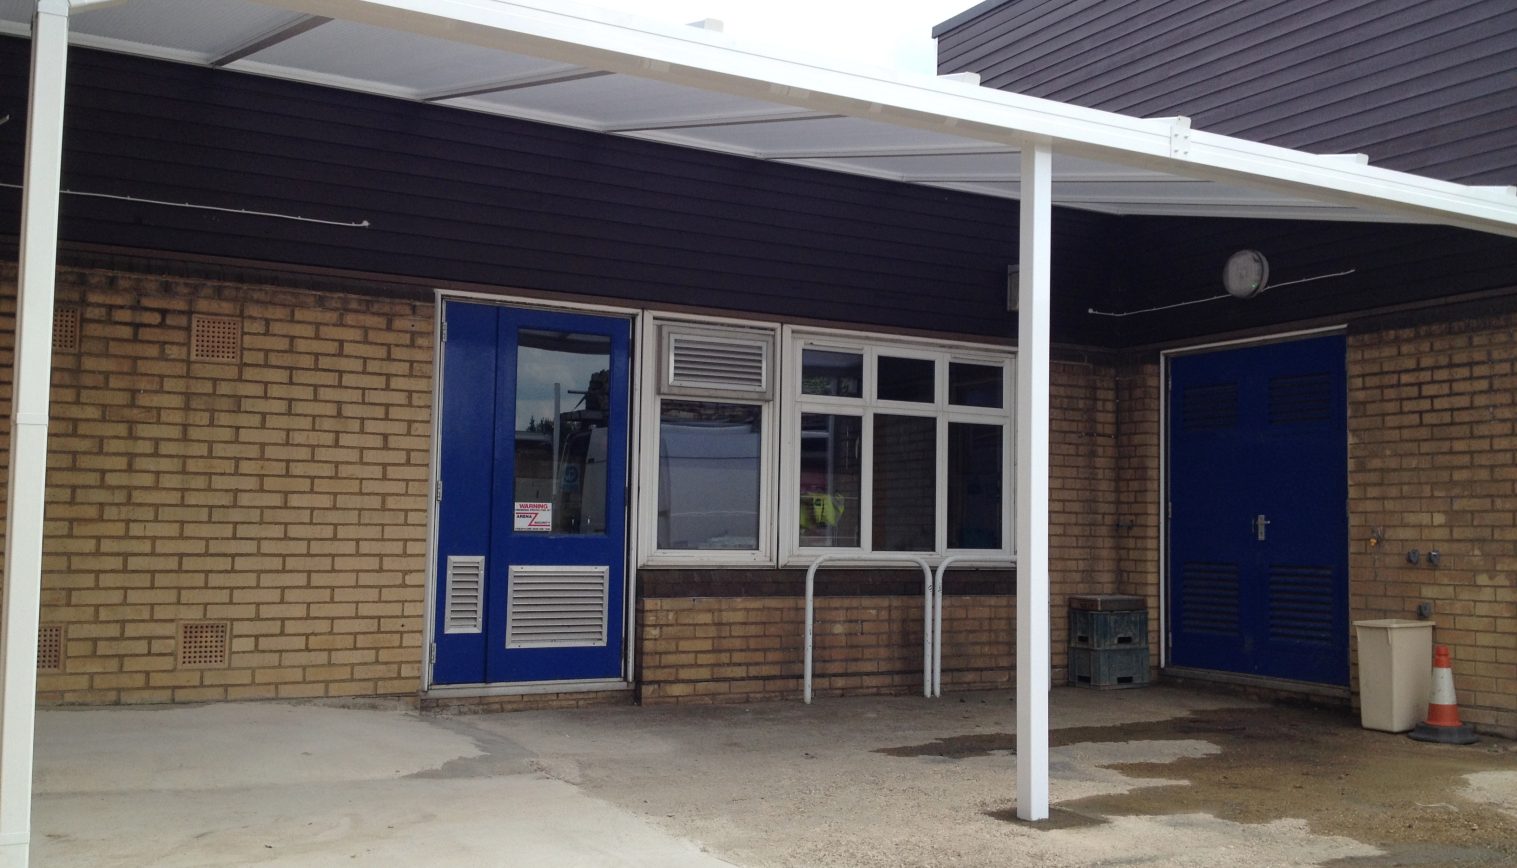 Brockswood Primary School – Second Installation